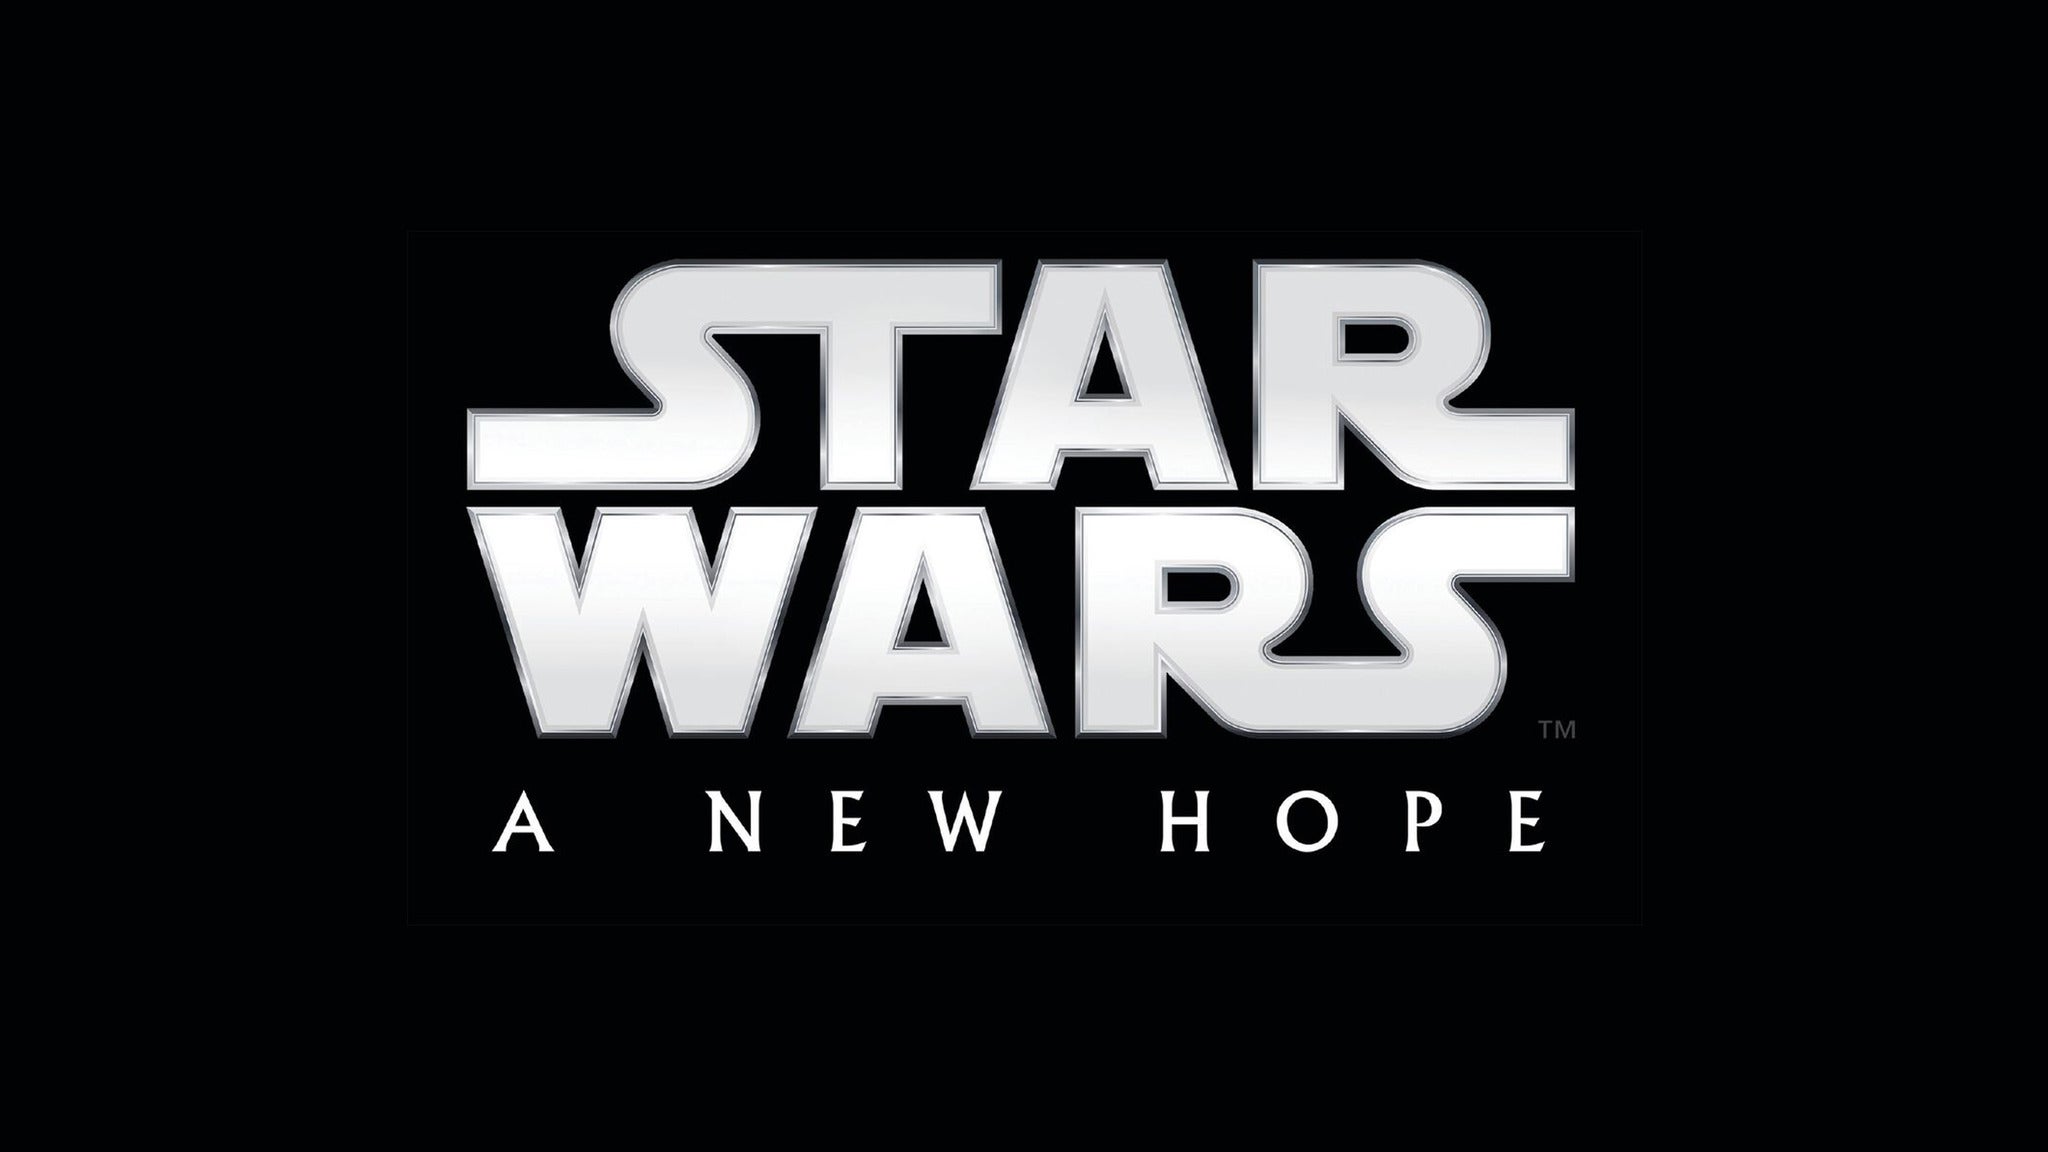 Star Wars: The Empire Strikes Back In Concert With Atlanta Symphony in Atlanta promo photo for Venue / Subs presale offer code